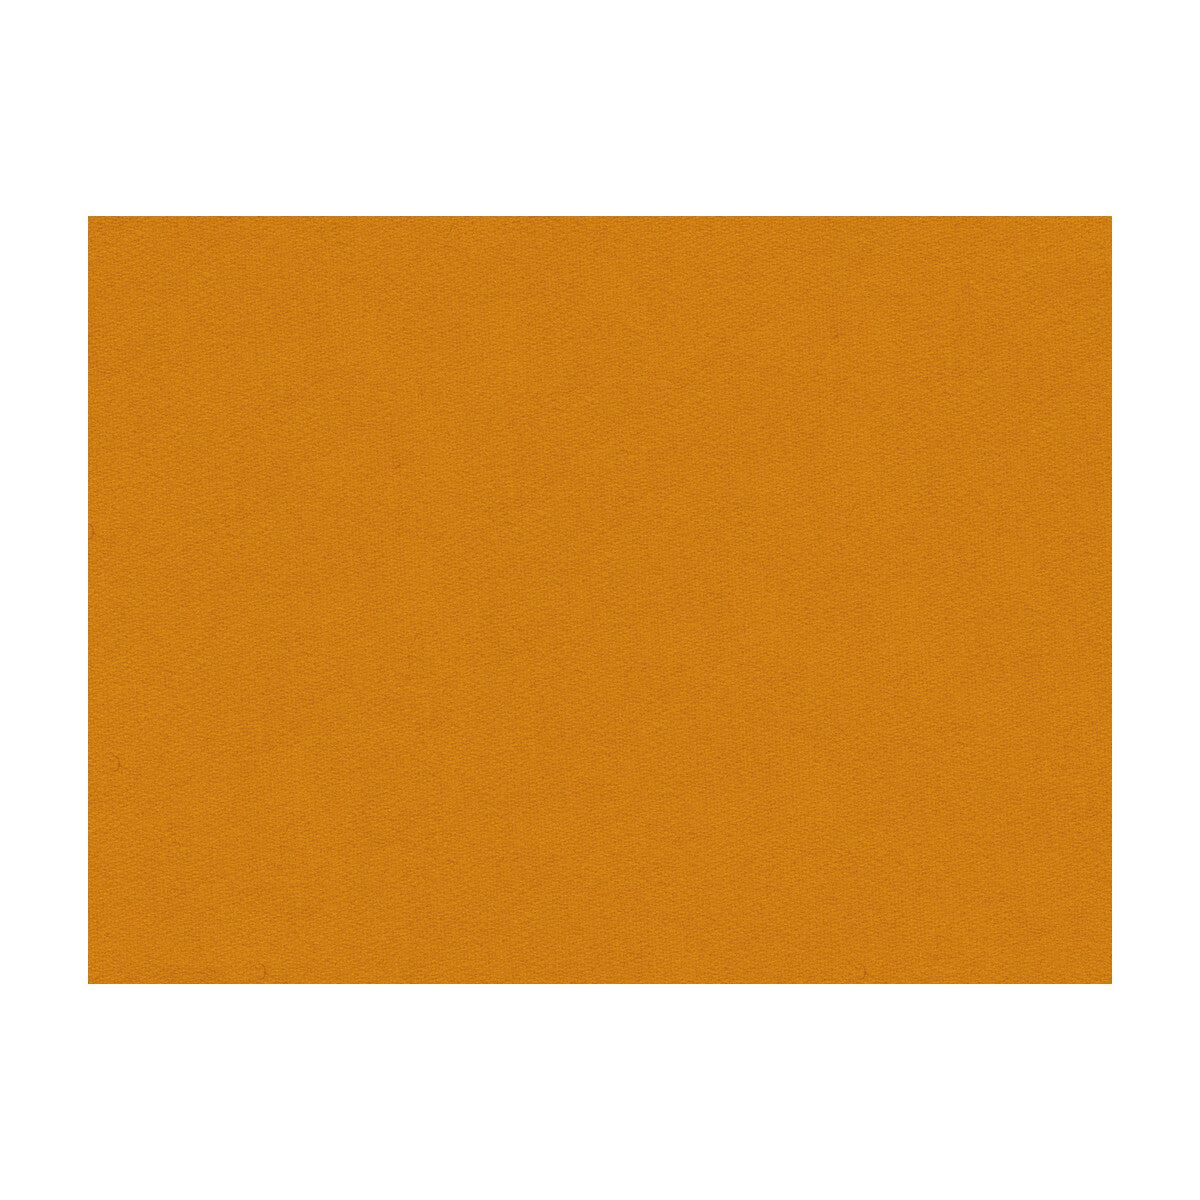 Chevalier Wool fabric in saffron color - pattern 8013149.44.0 - by Brunschwig &amp; Fils